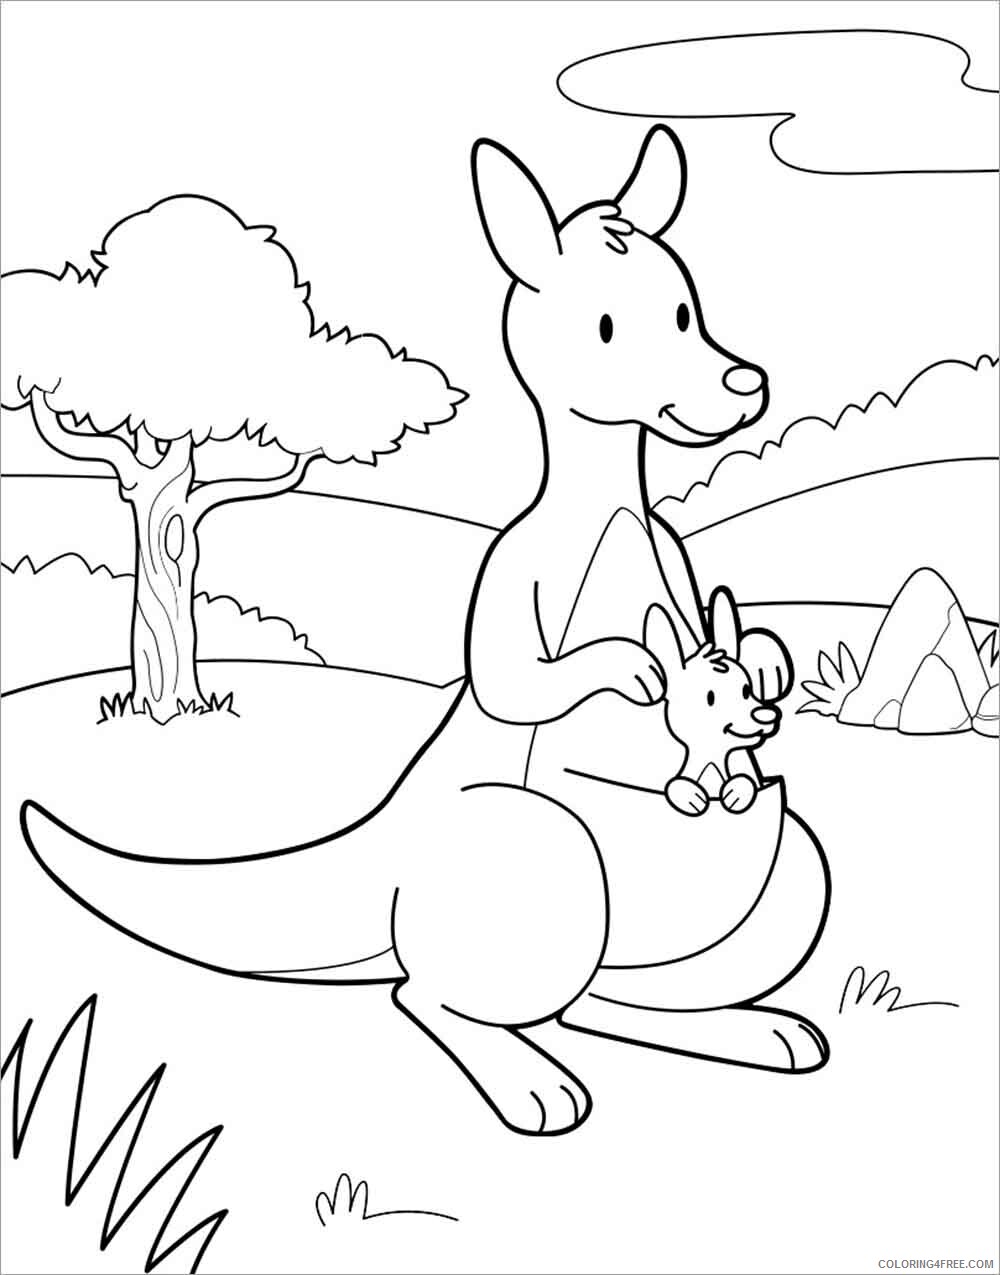 Kangaroo Coloring Pages Animal Printable Sheets Moms and Baby 2021 2958 Coloring4free